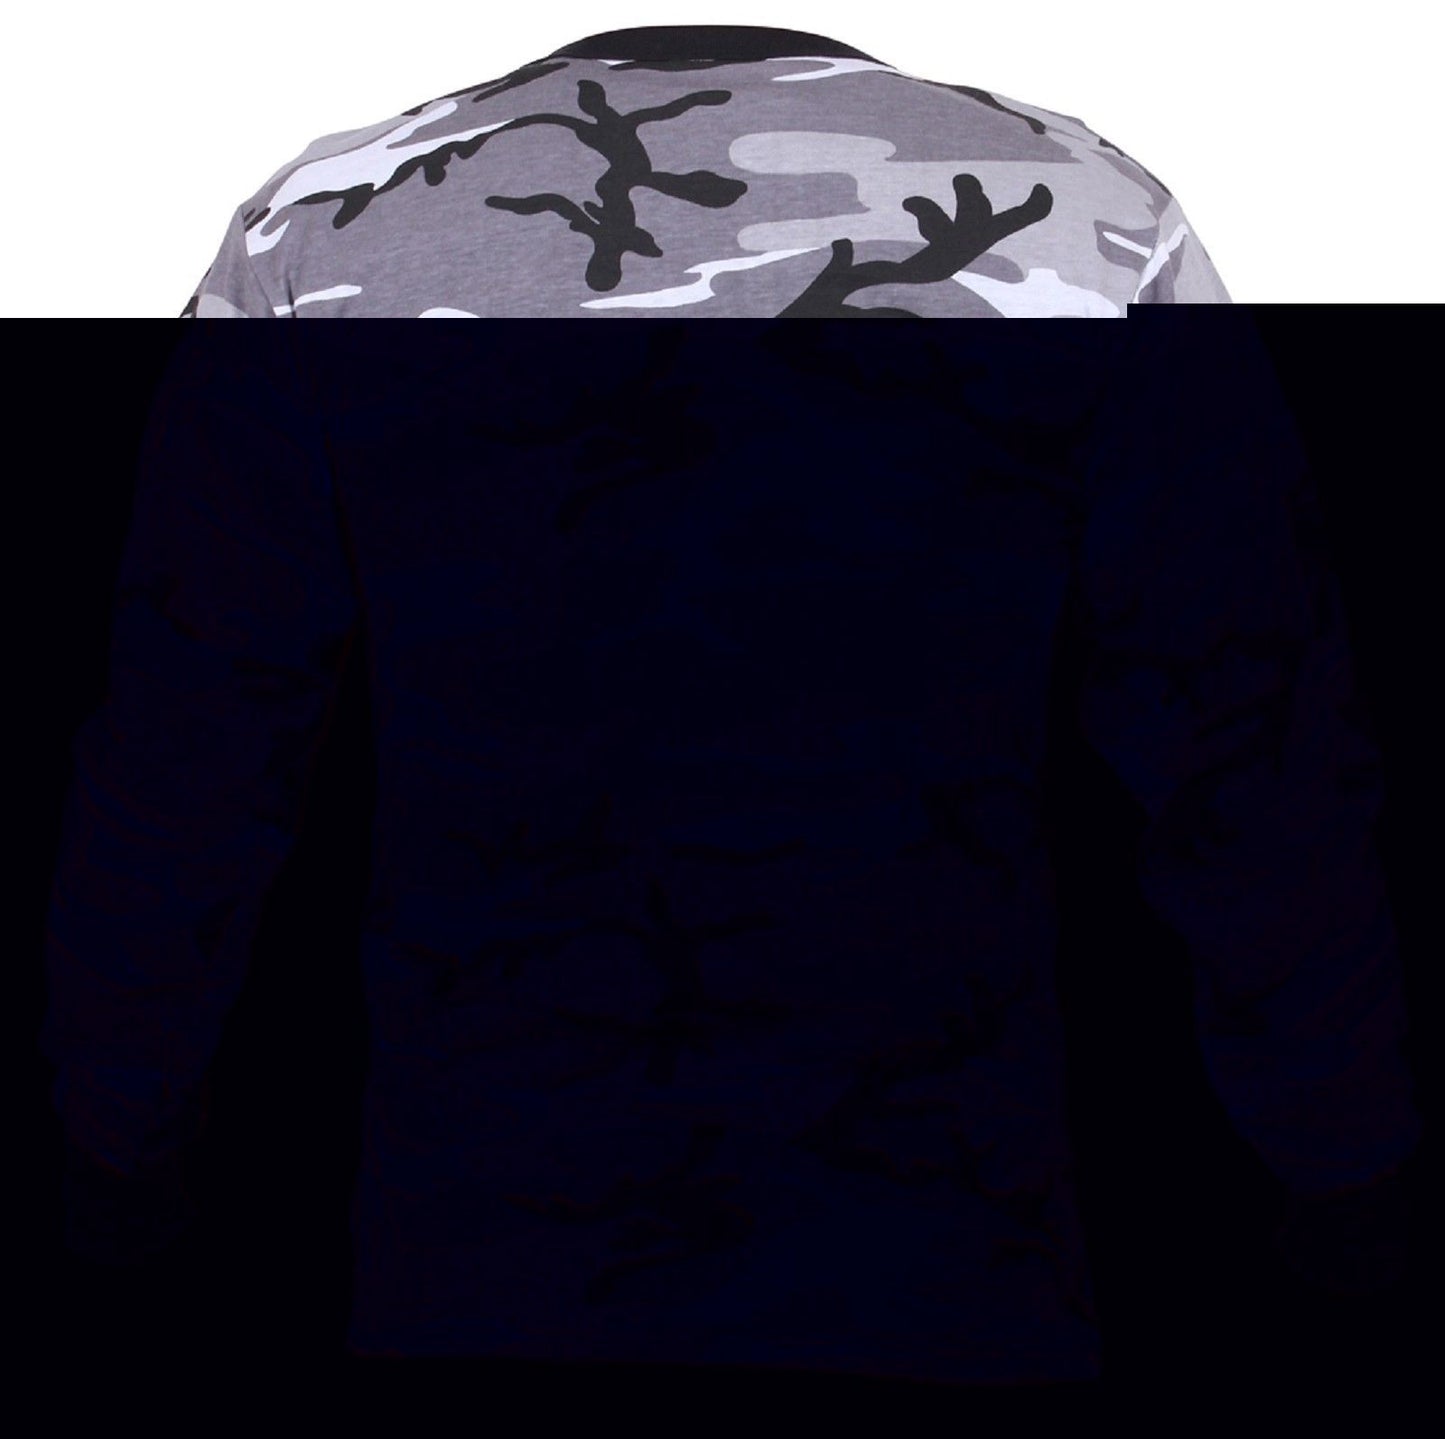 Sky Blue Camo or City Camouflage Long Sleeve Cotton T-Shirt Rothco 67790